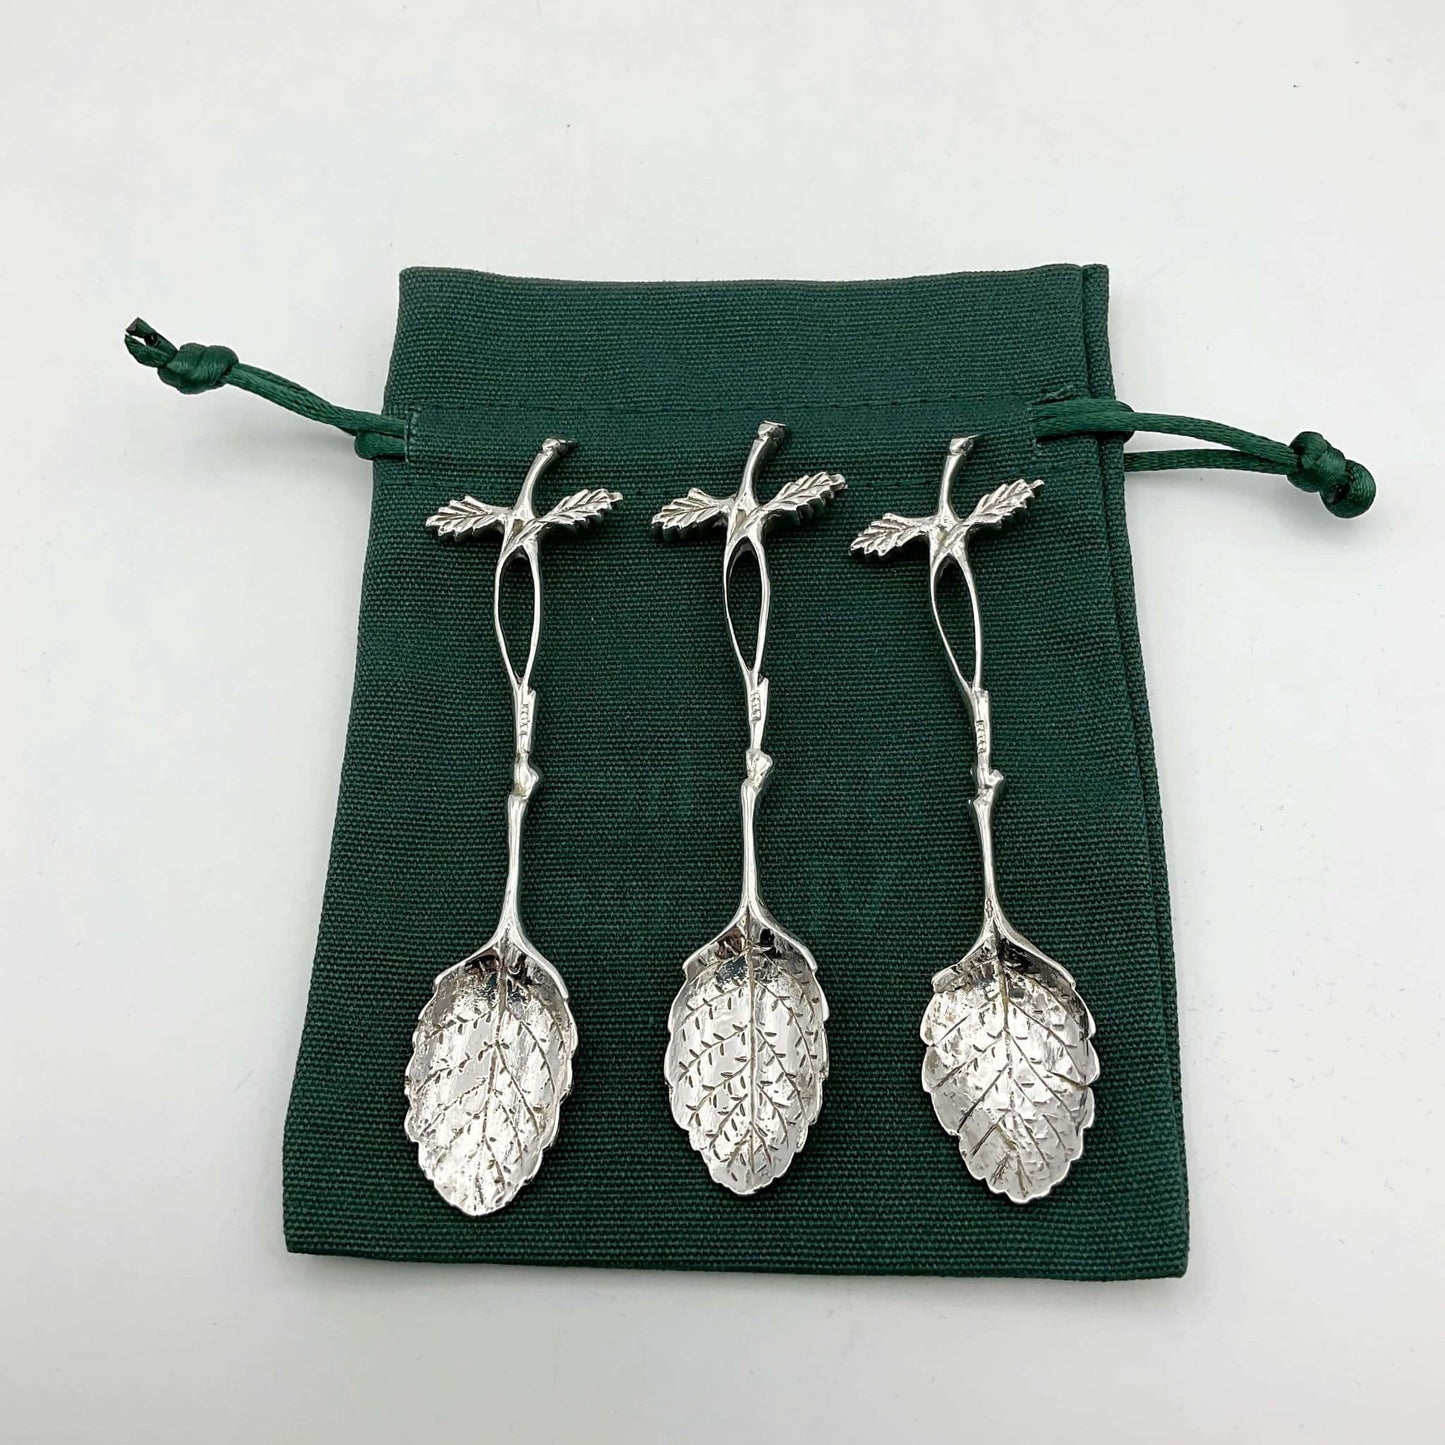 Set of 3 Leaf Demitasse Spoons